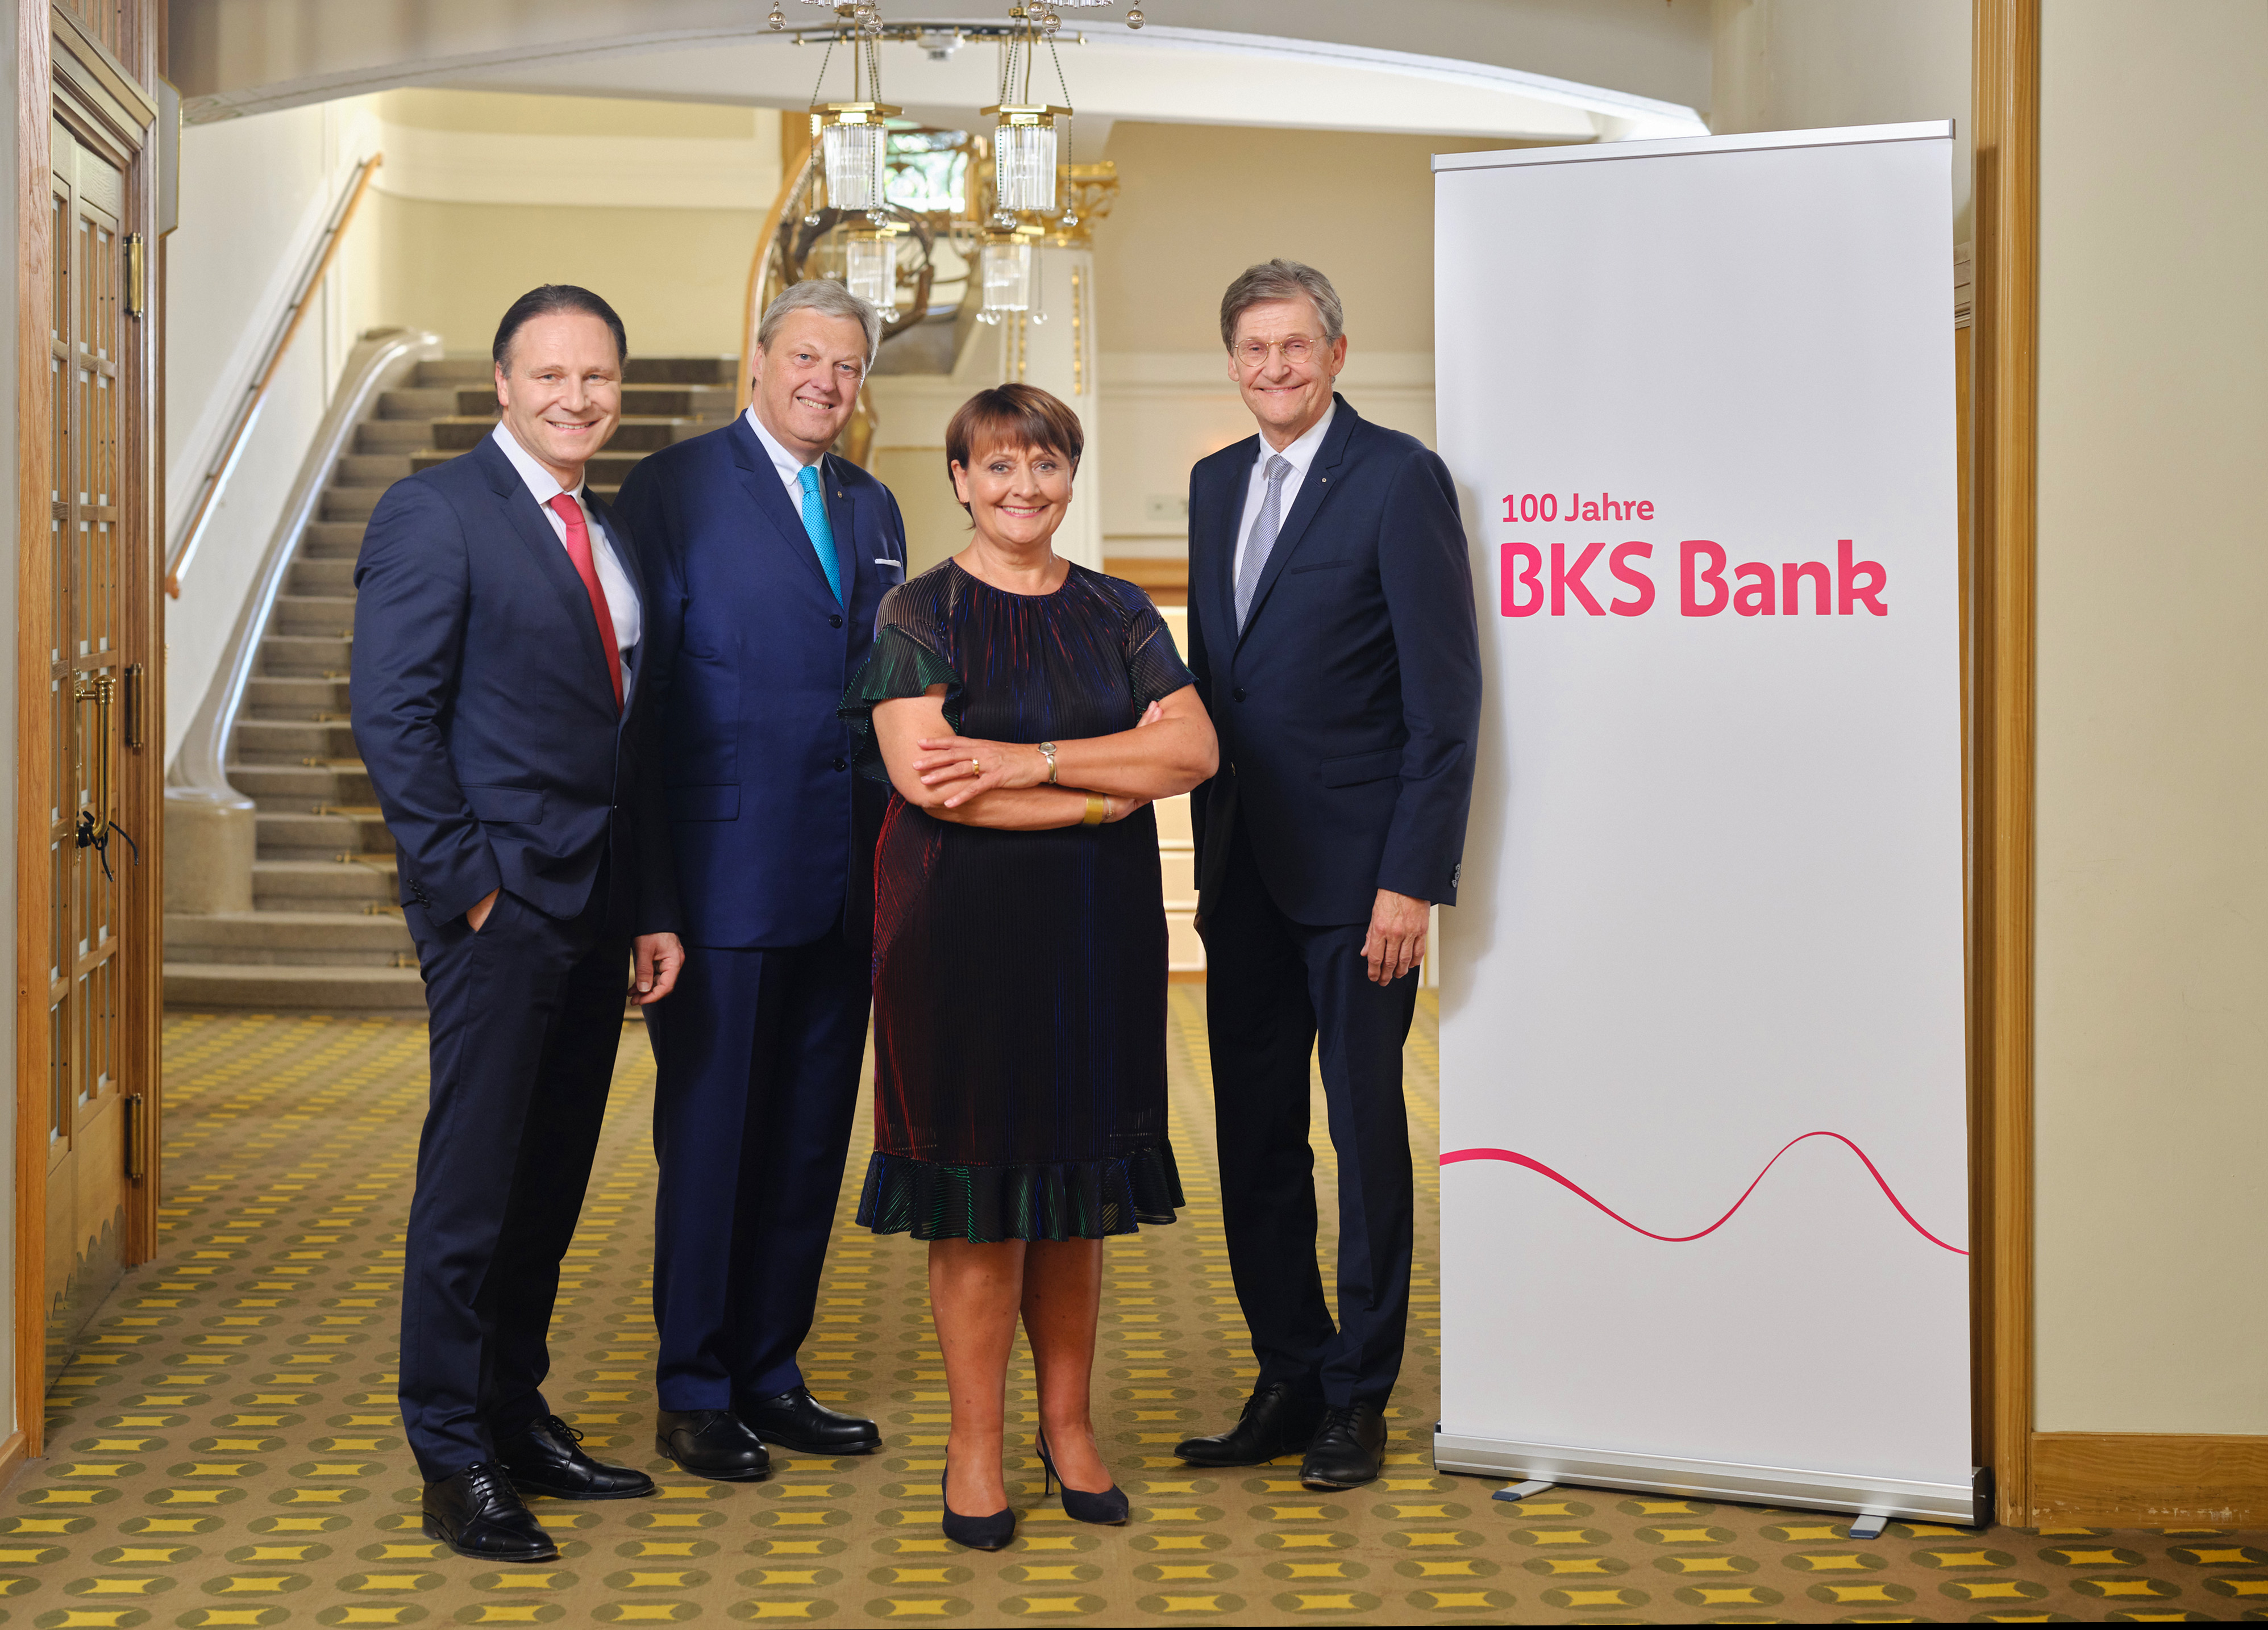 Foto: ©Arnold Pöschl Bildunterschrift: BKS Bank-Vorstand v.l.n.r.: Alexander Novak, Nikolaus Juhász, Herta Stockbauer, Dieter Kraßnitzer